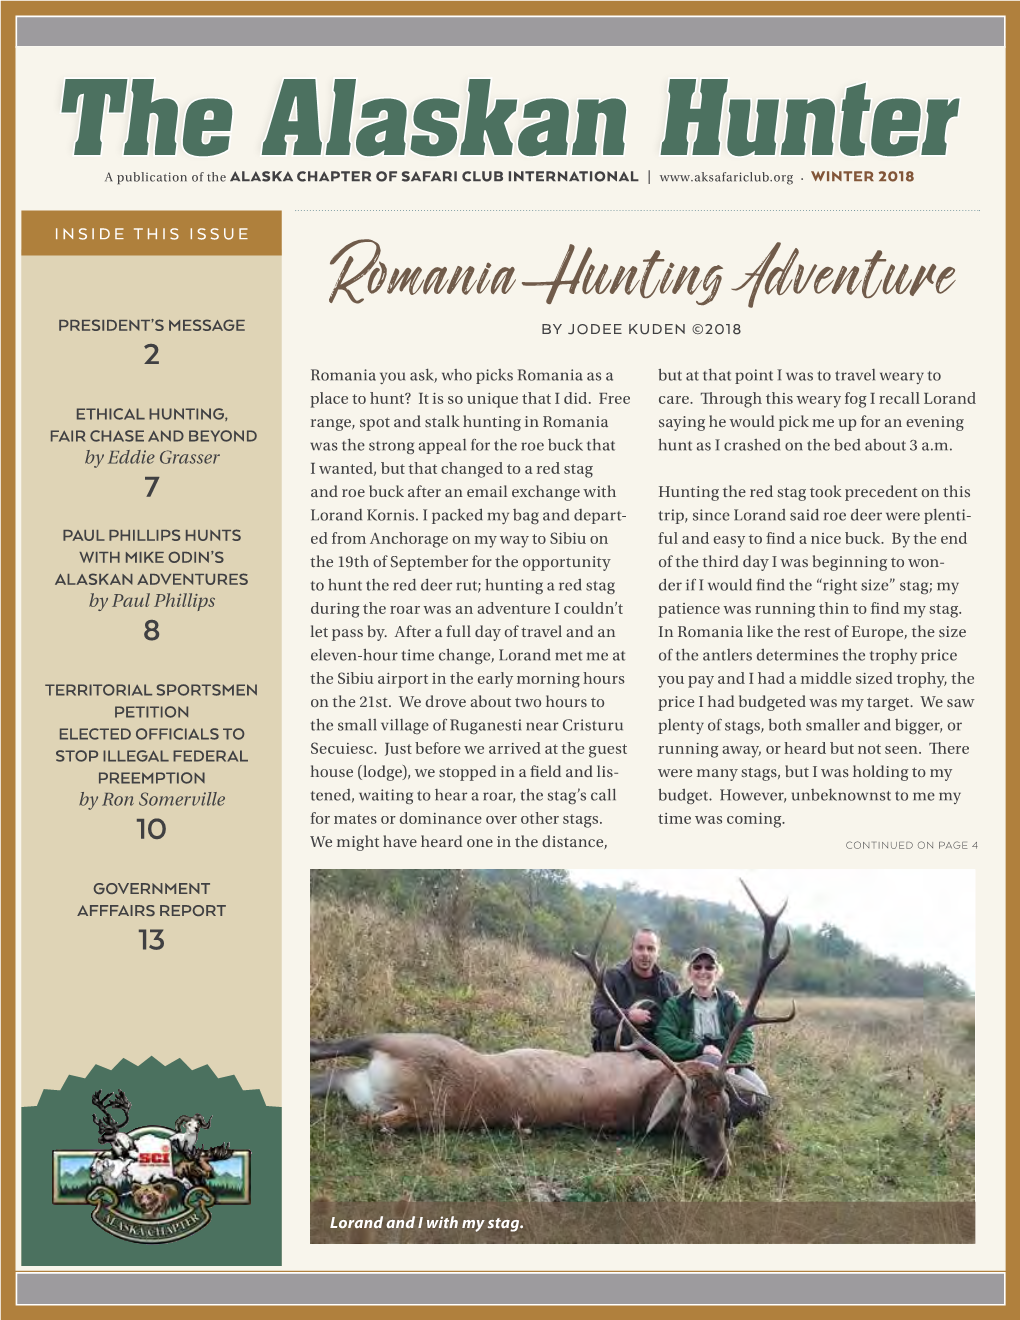 Romania Hunting Adventure